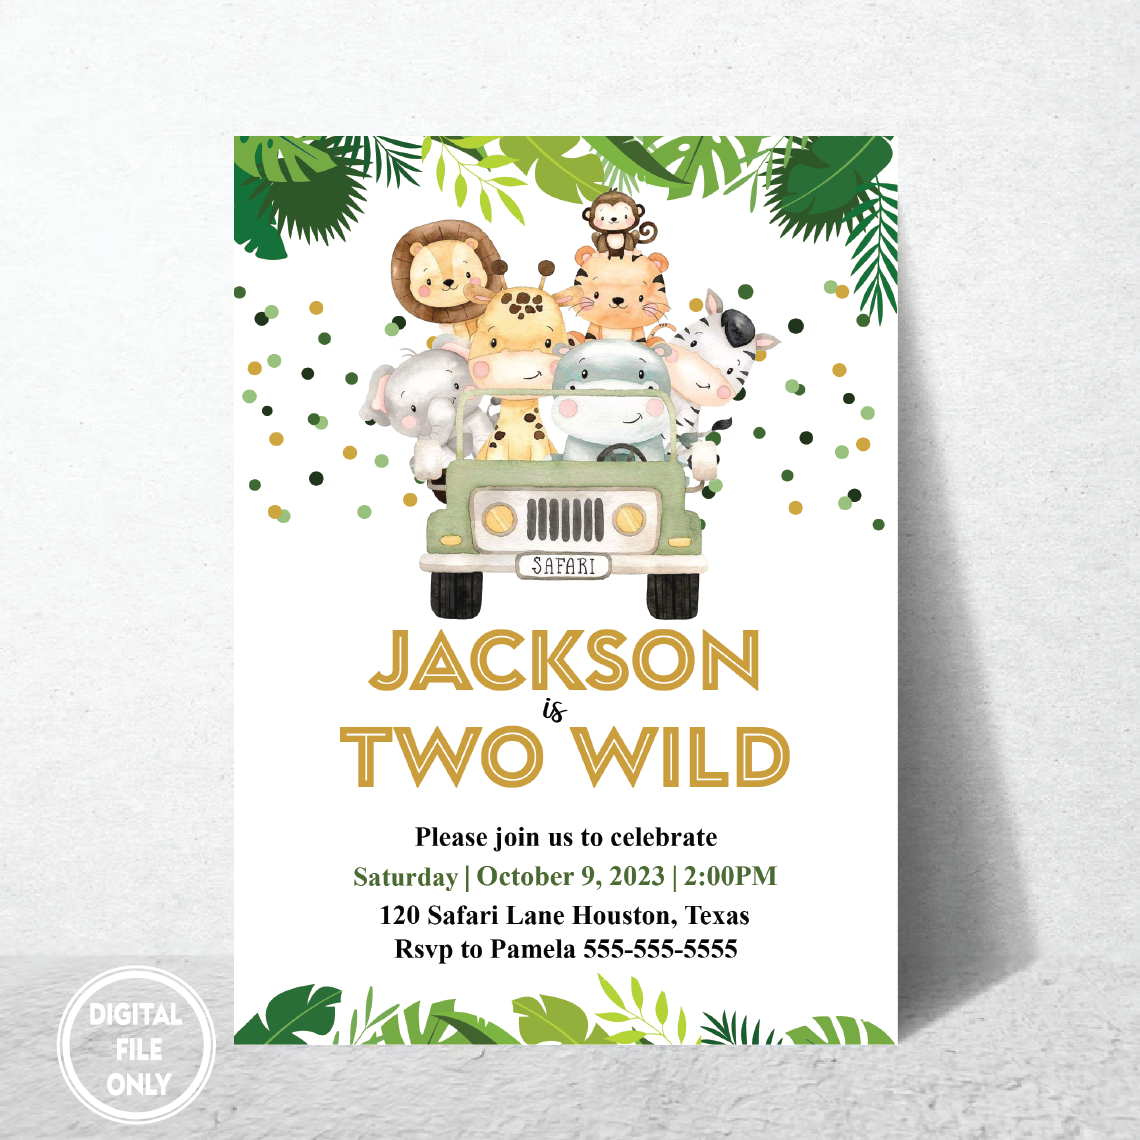 Personalized File Two Wild invitation - Editable - Printable - Jungle Safari Birthday - Invitation - Digital download PNG File Only